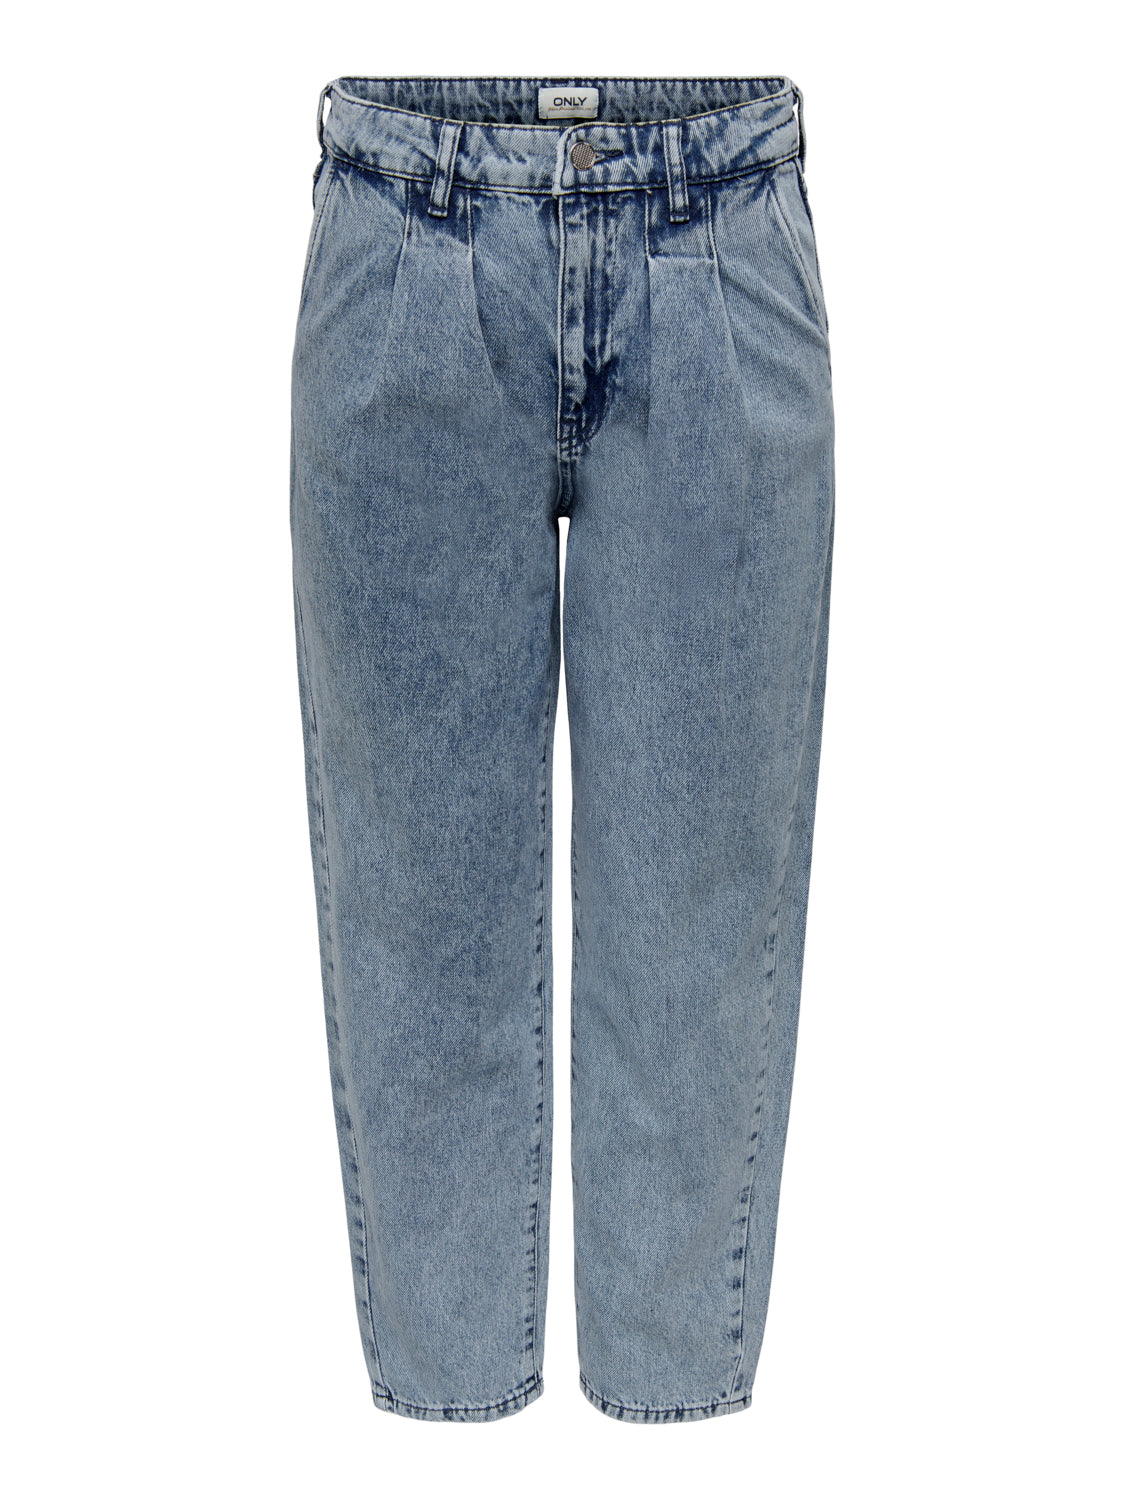 ONLHAVANA Jeans - Medium Blue Denim